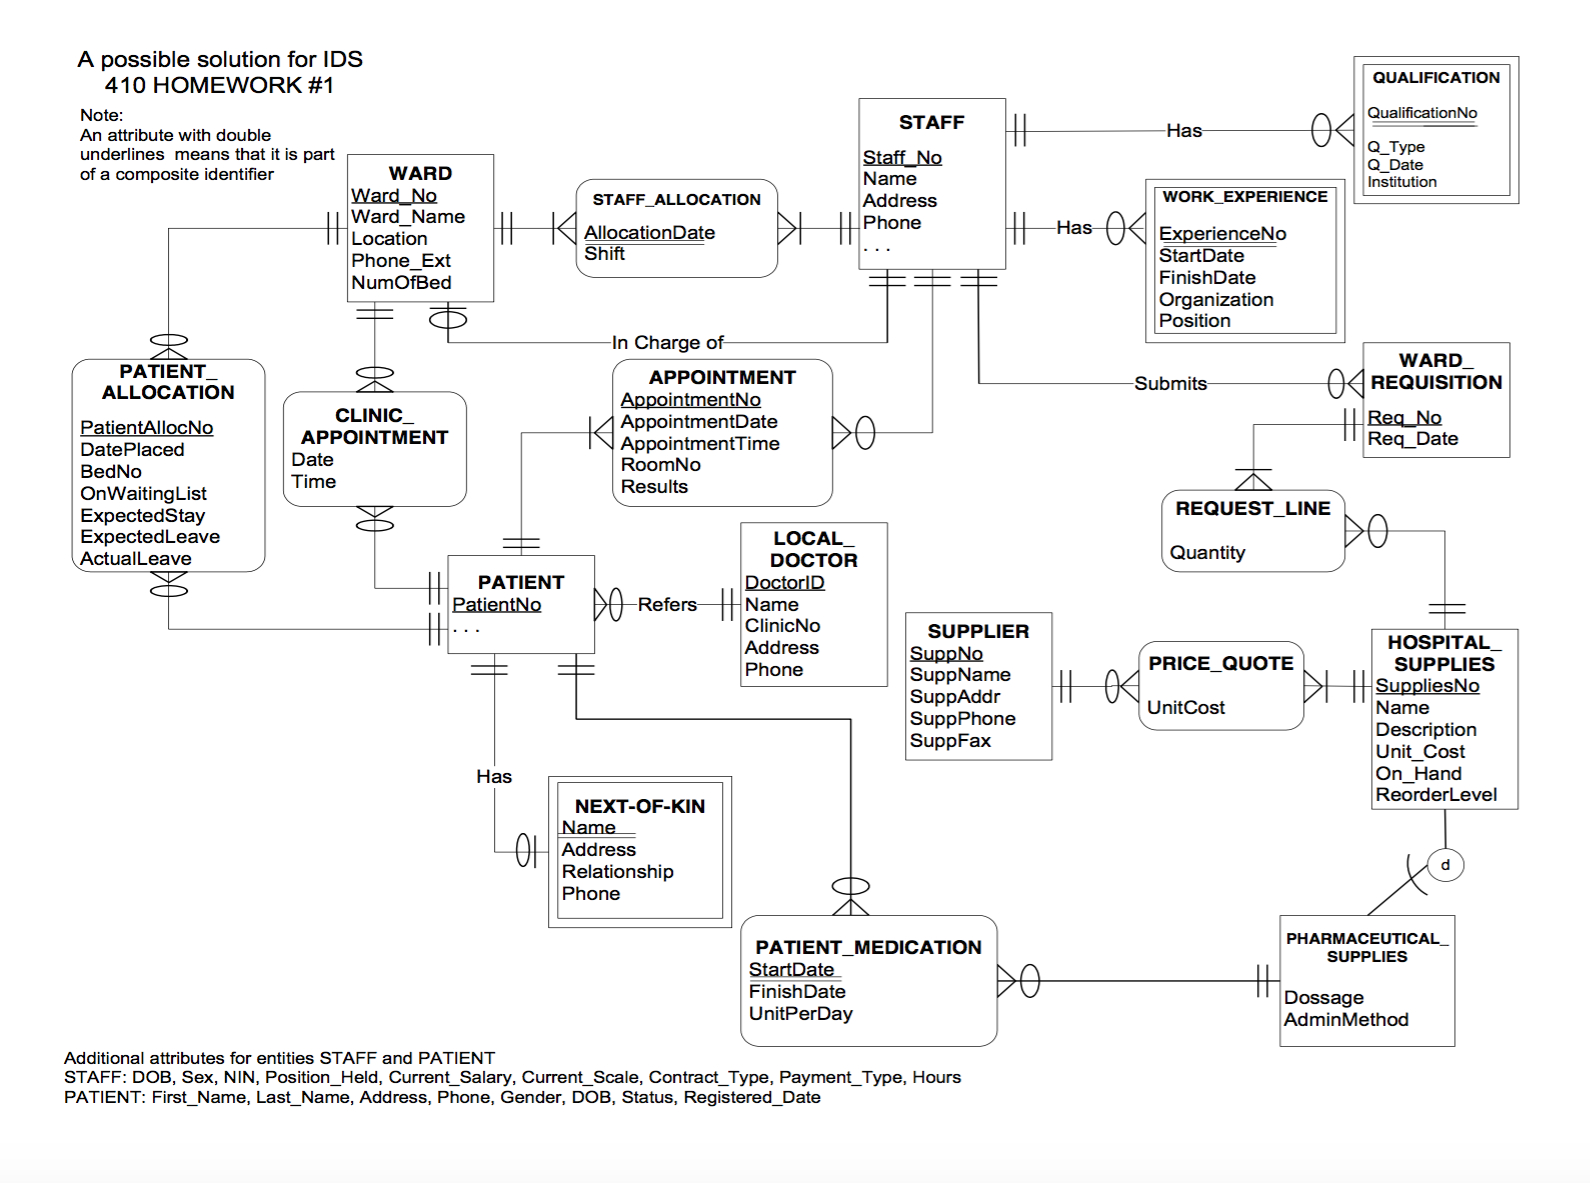 er diagram into a relational database schema